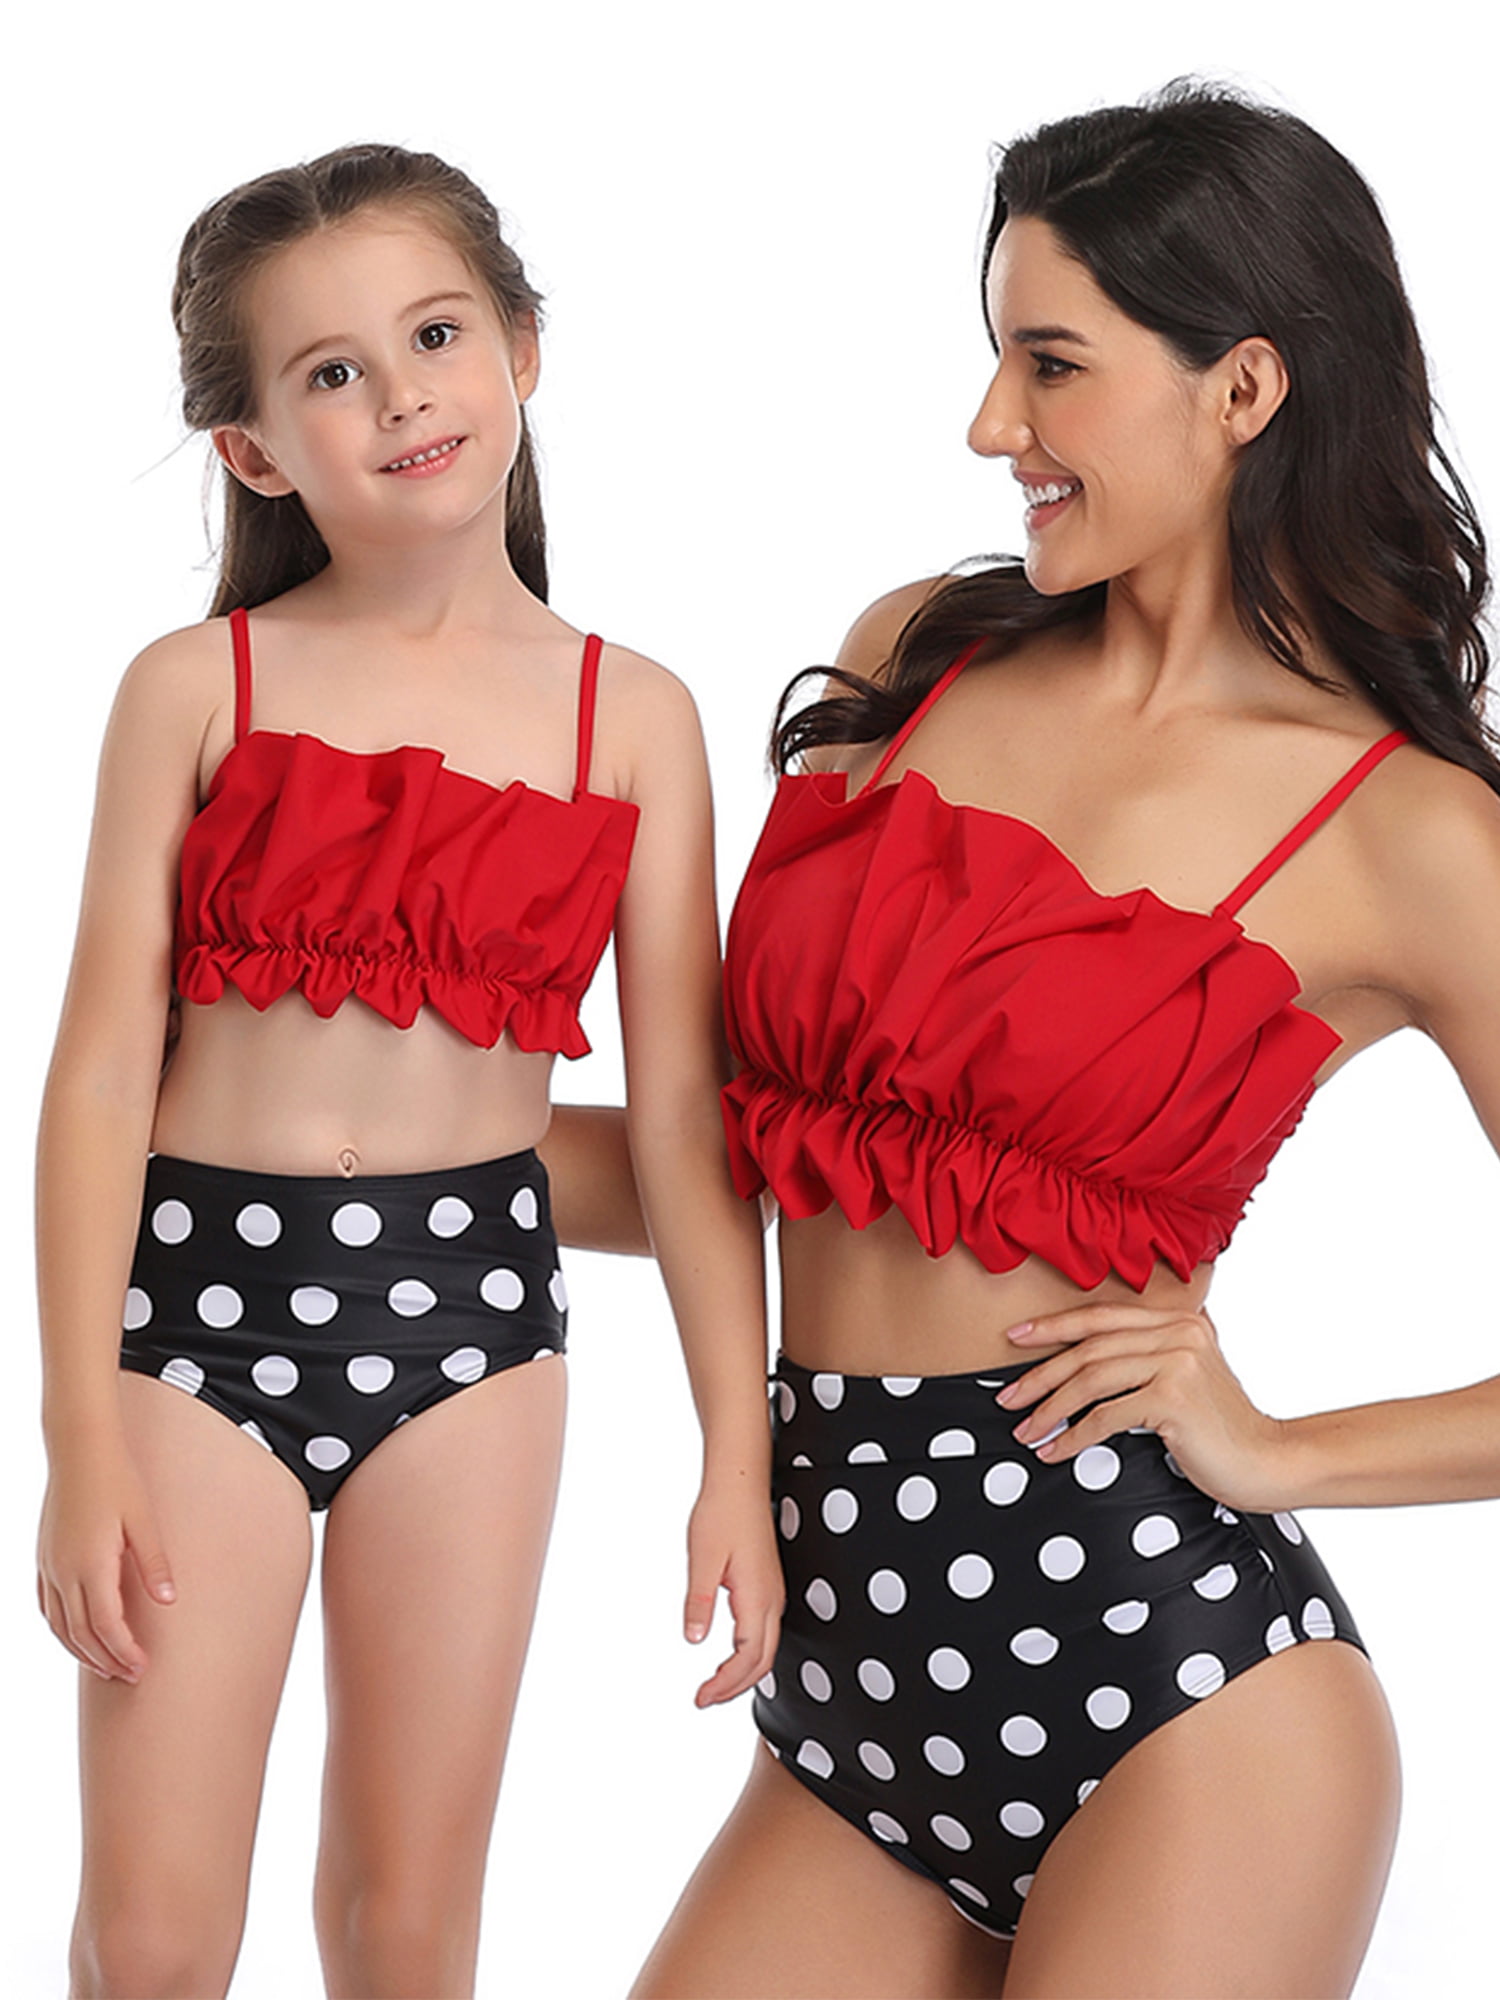 Parent Child Swimwear Underwear Beach Wear Matching Family Outfits Kids Swimsuit